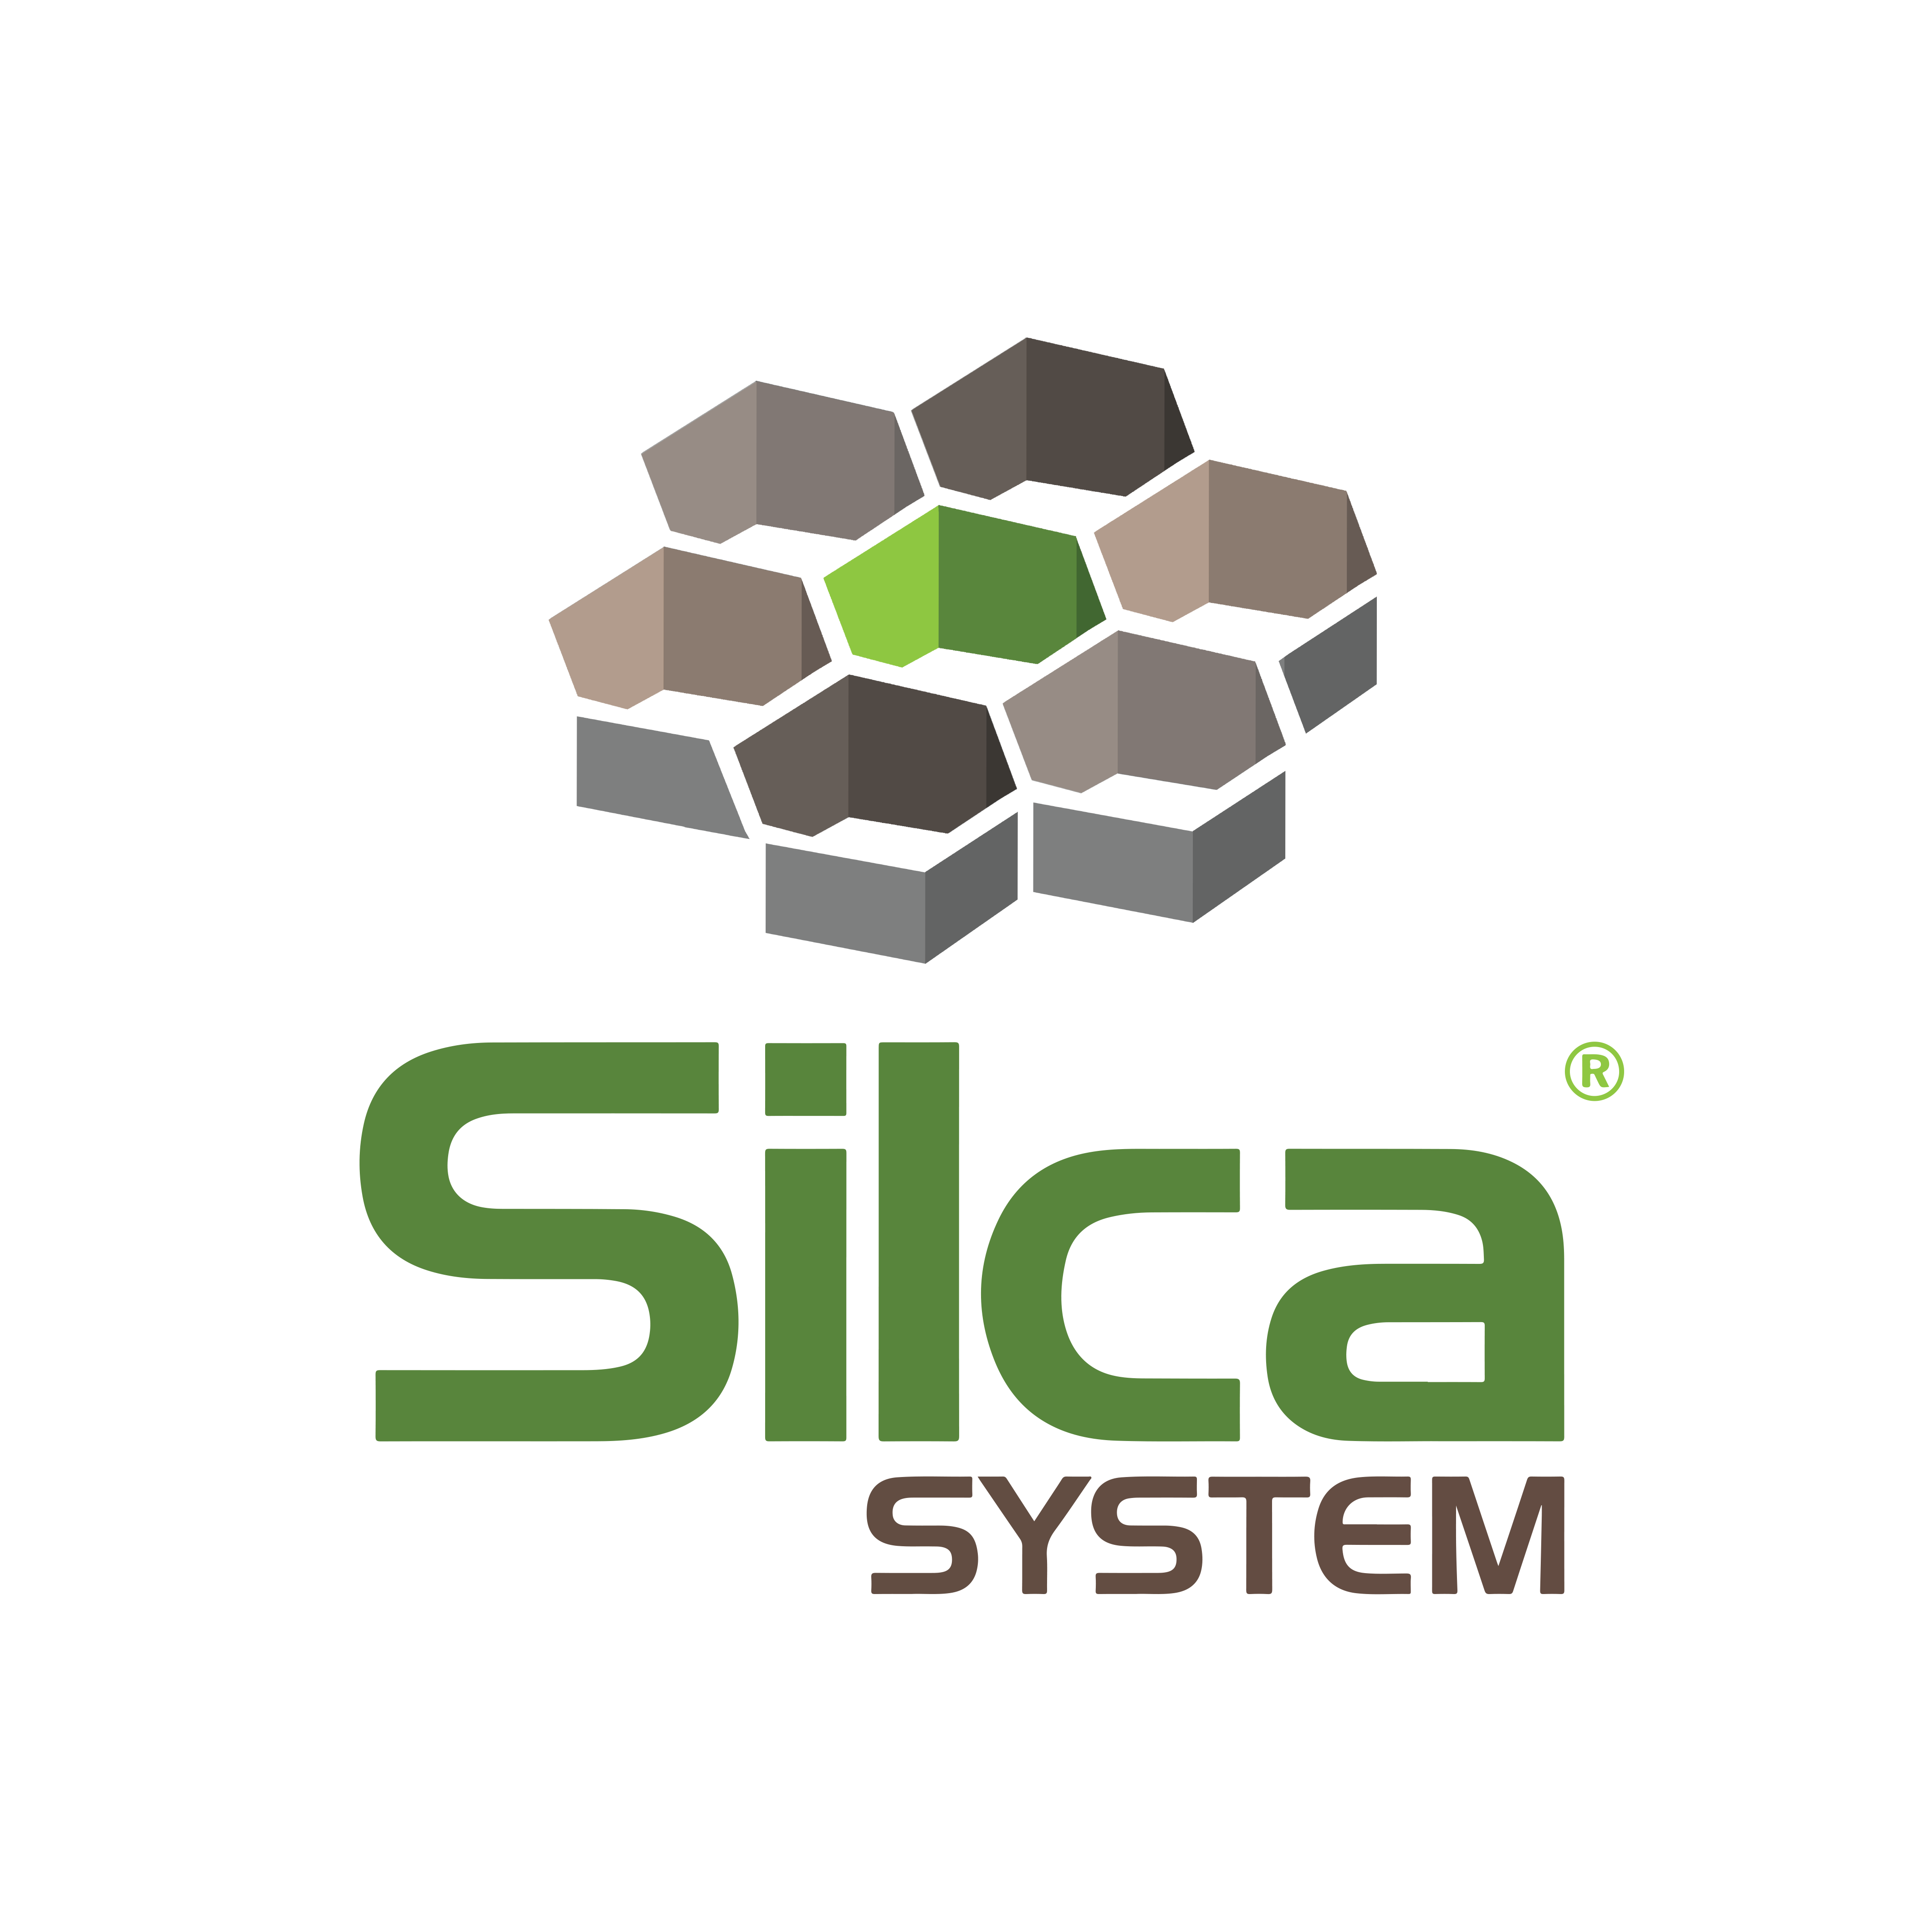 Silca System